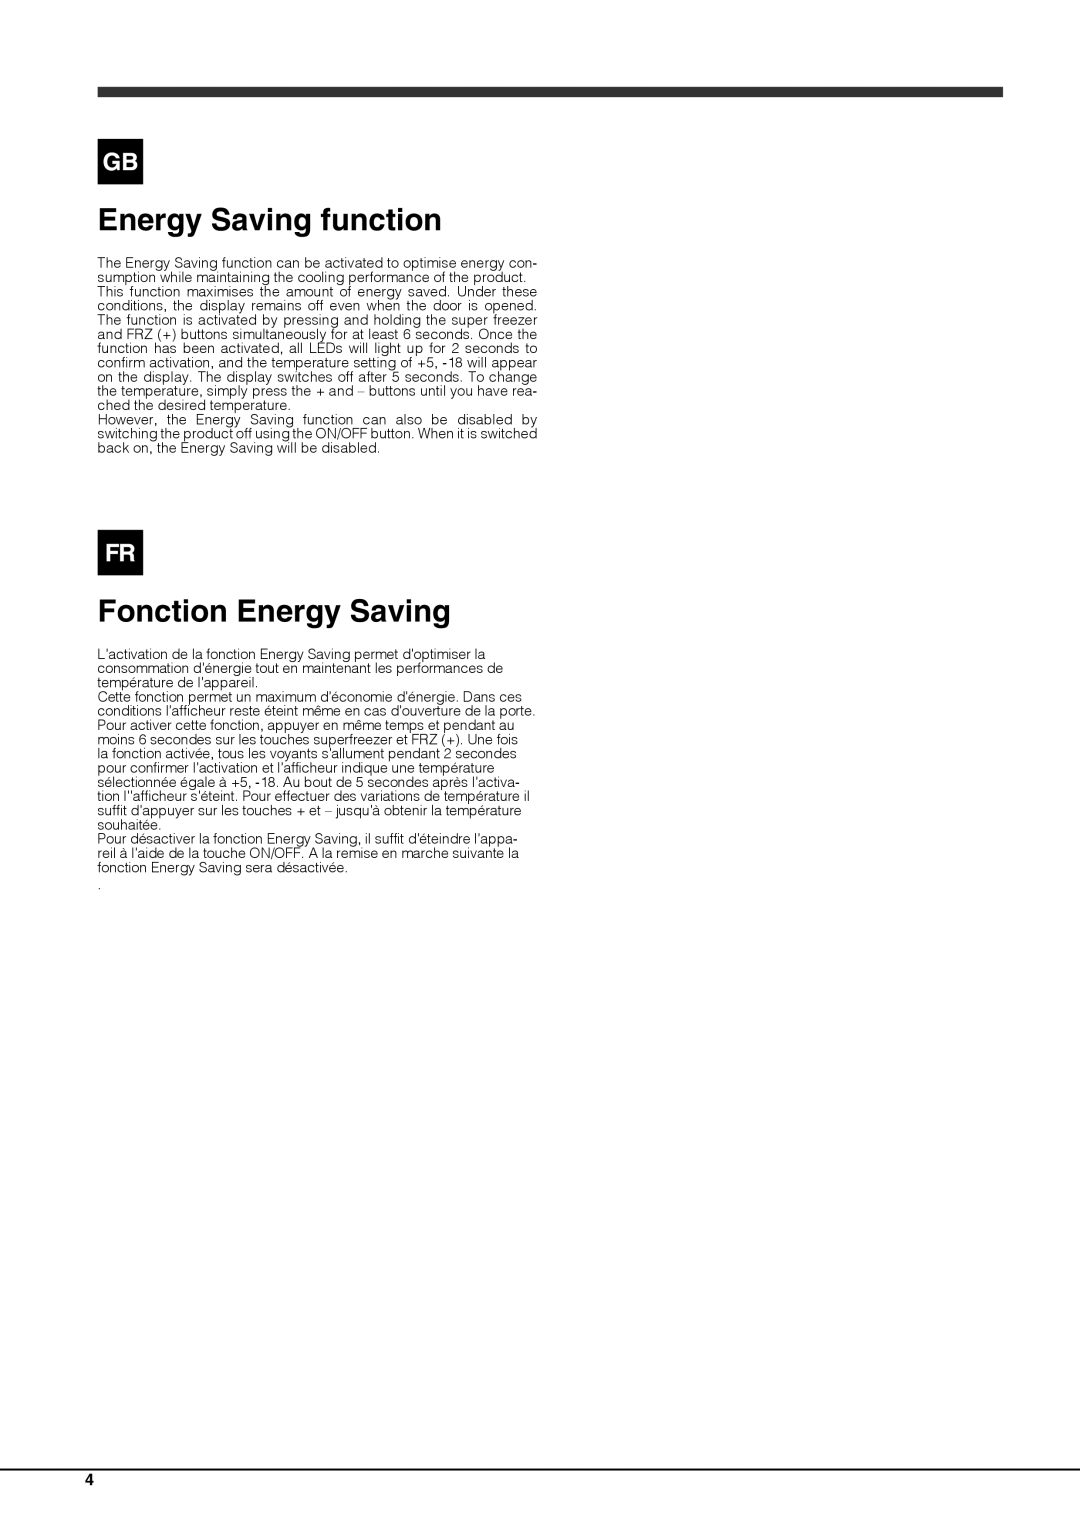 Ariston BCB 33 A F (AUS) manual Energy Saving function, Fonction Energy Saving 